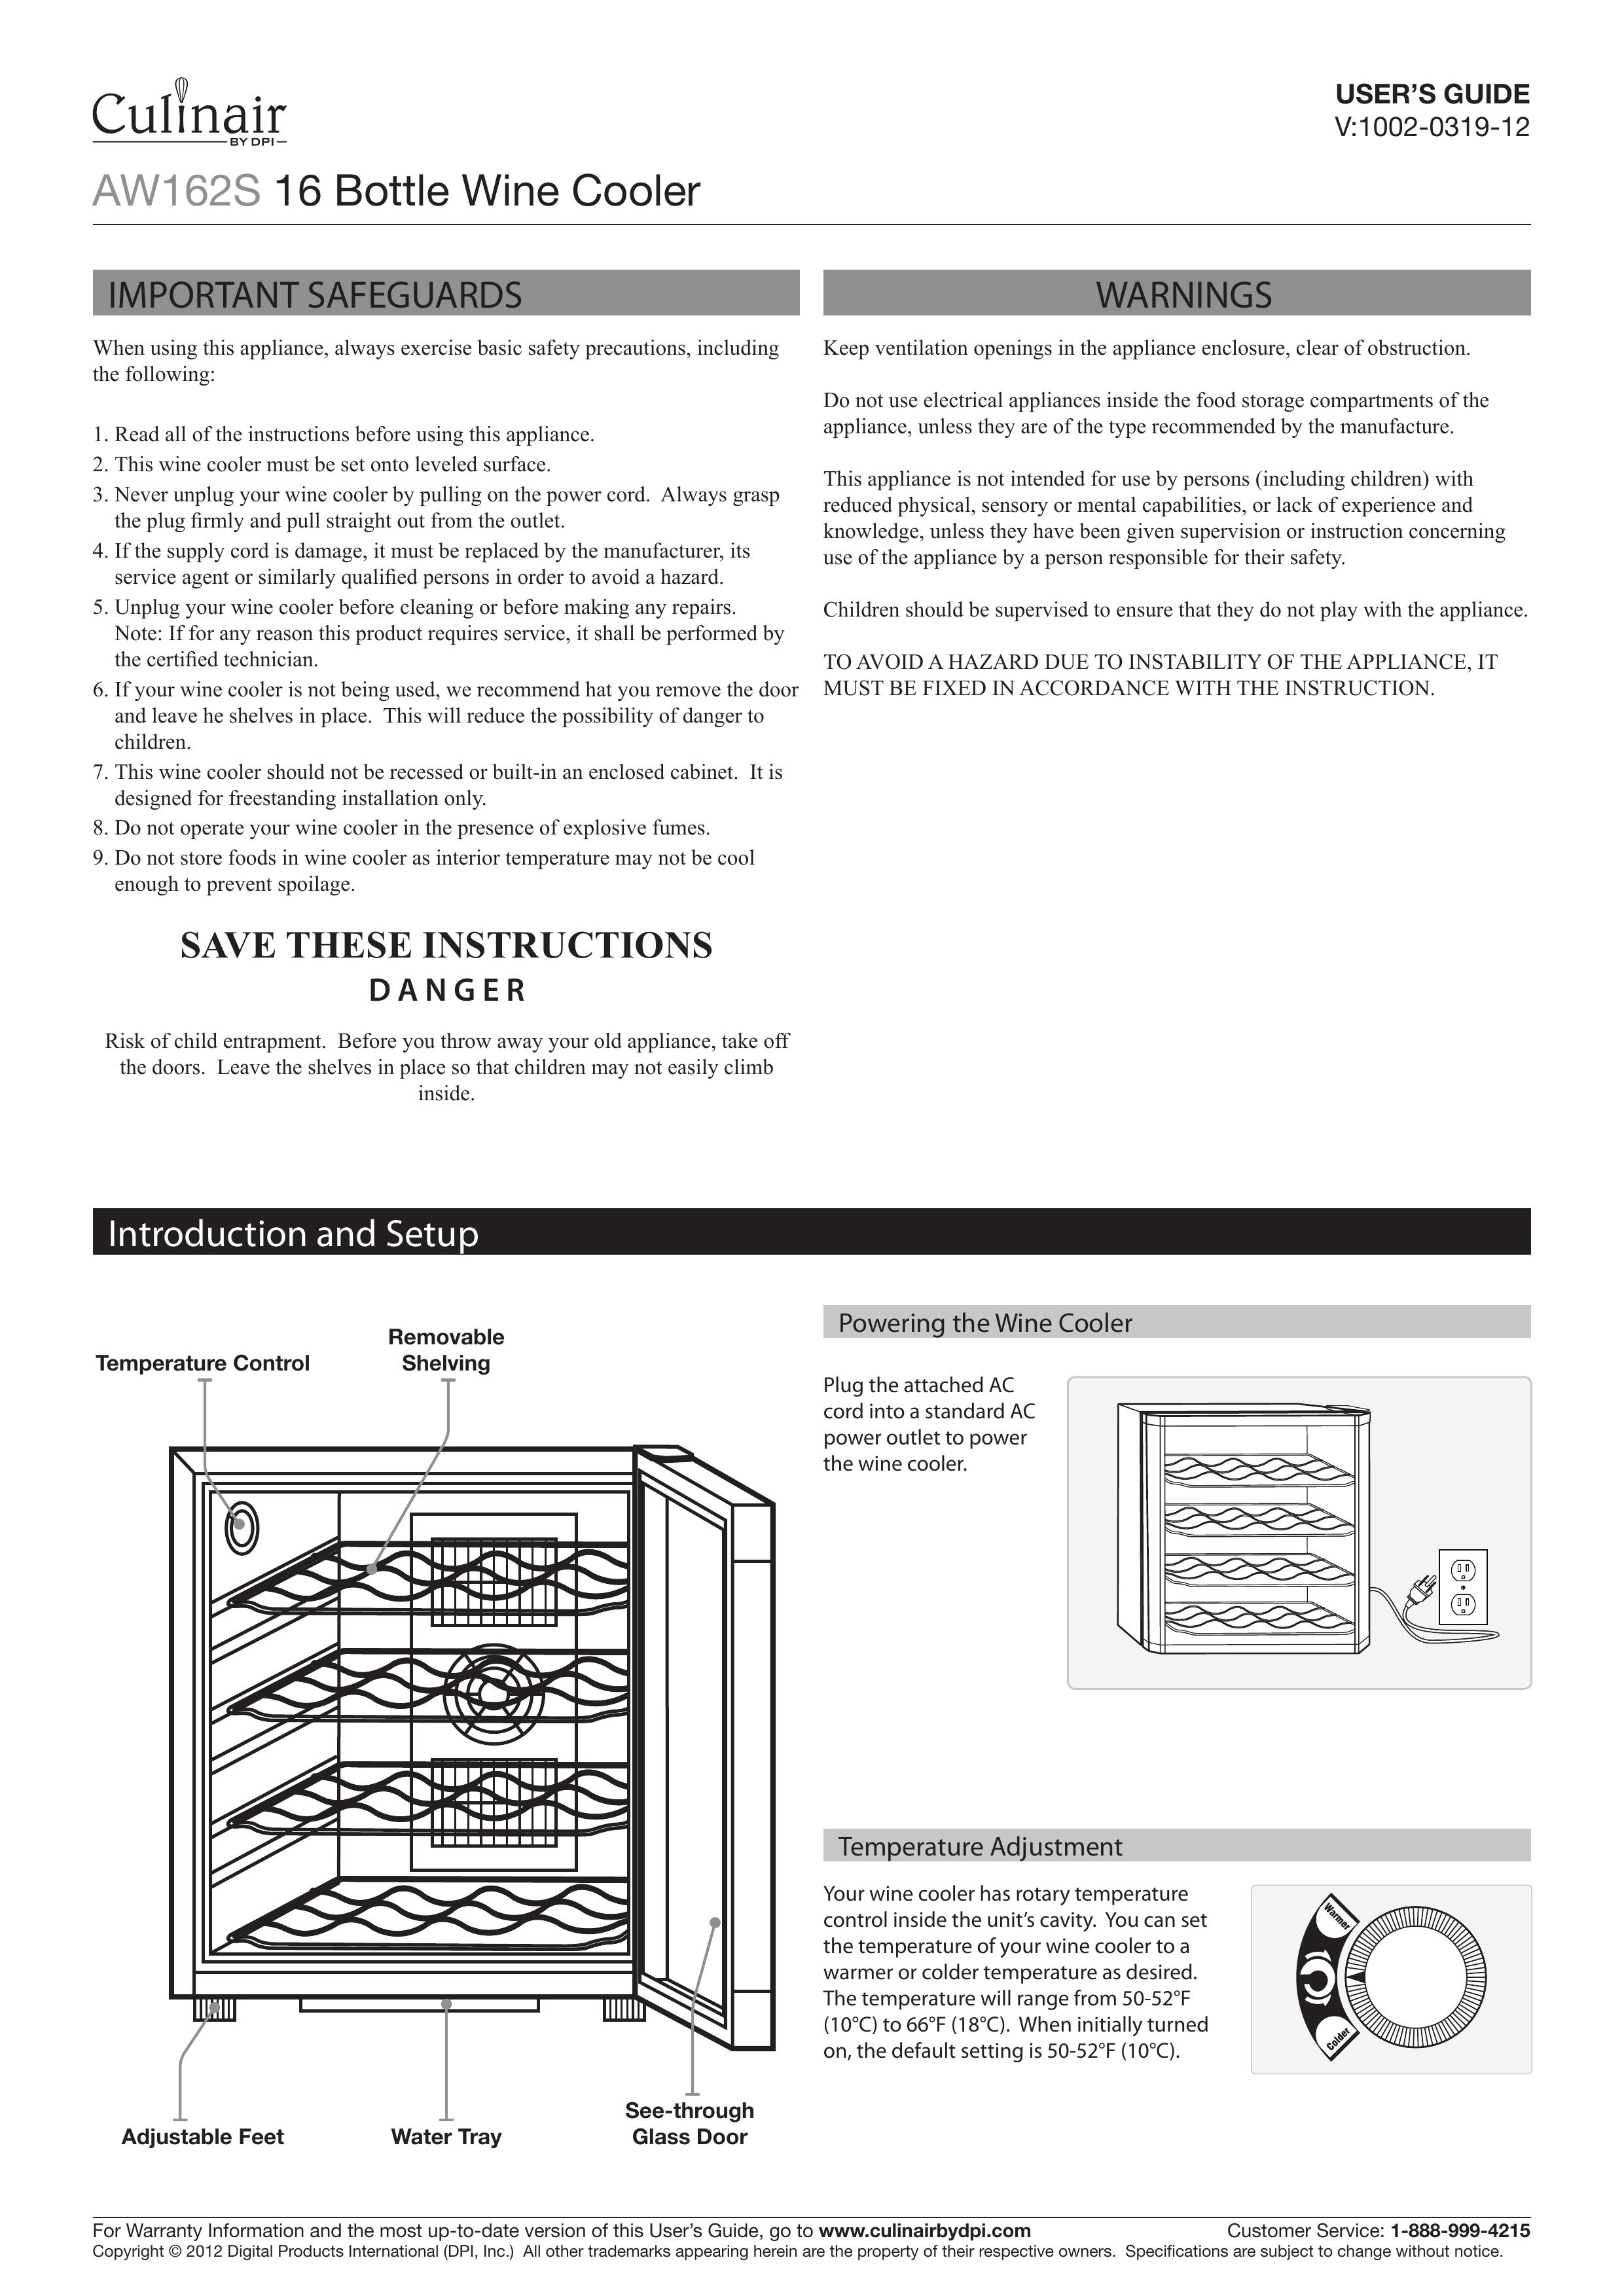 Culinair AW162S Refrigerator User Manual